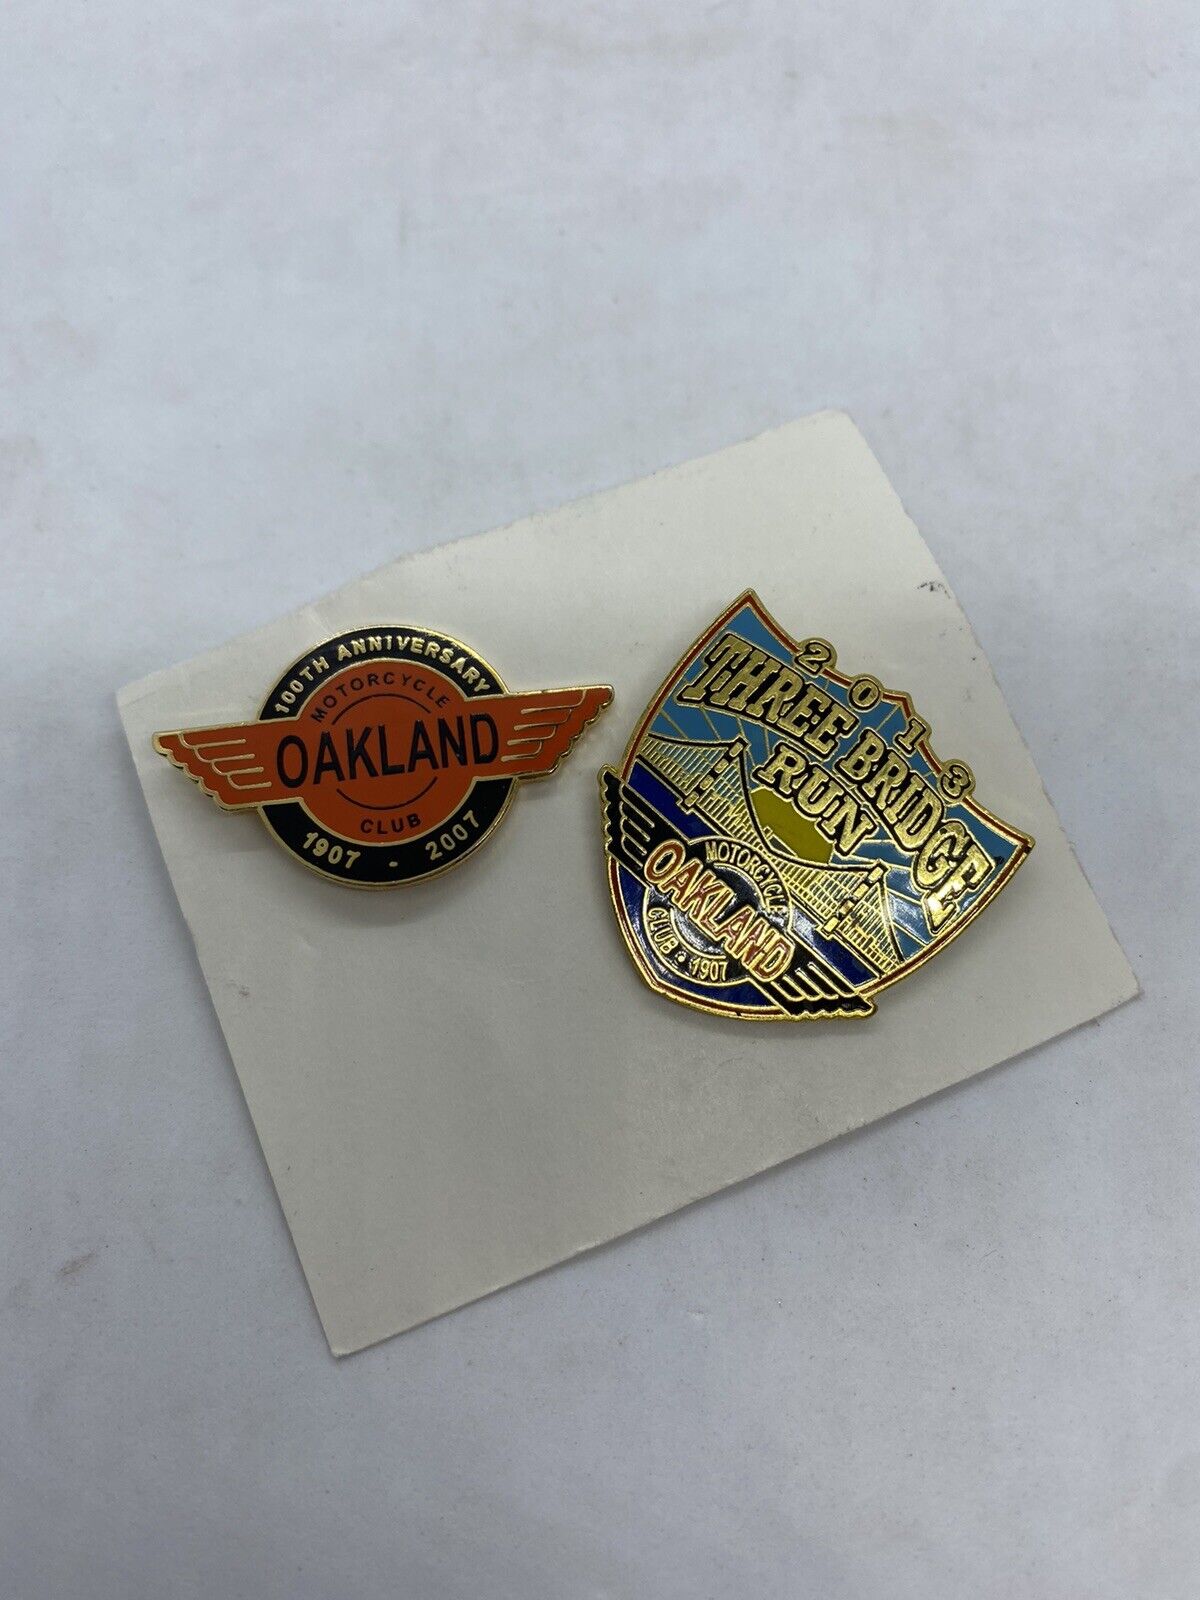 2007 And 2013 Oakland Motorcycle Club Pins 100th Anniversary Three Bridge Run